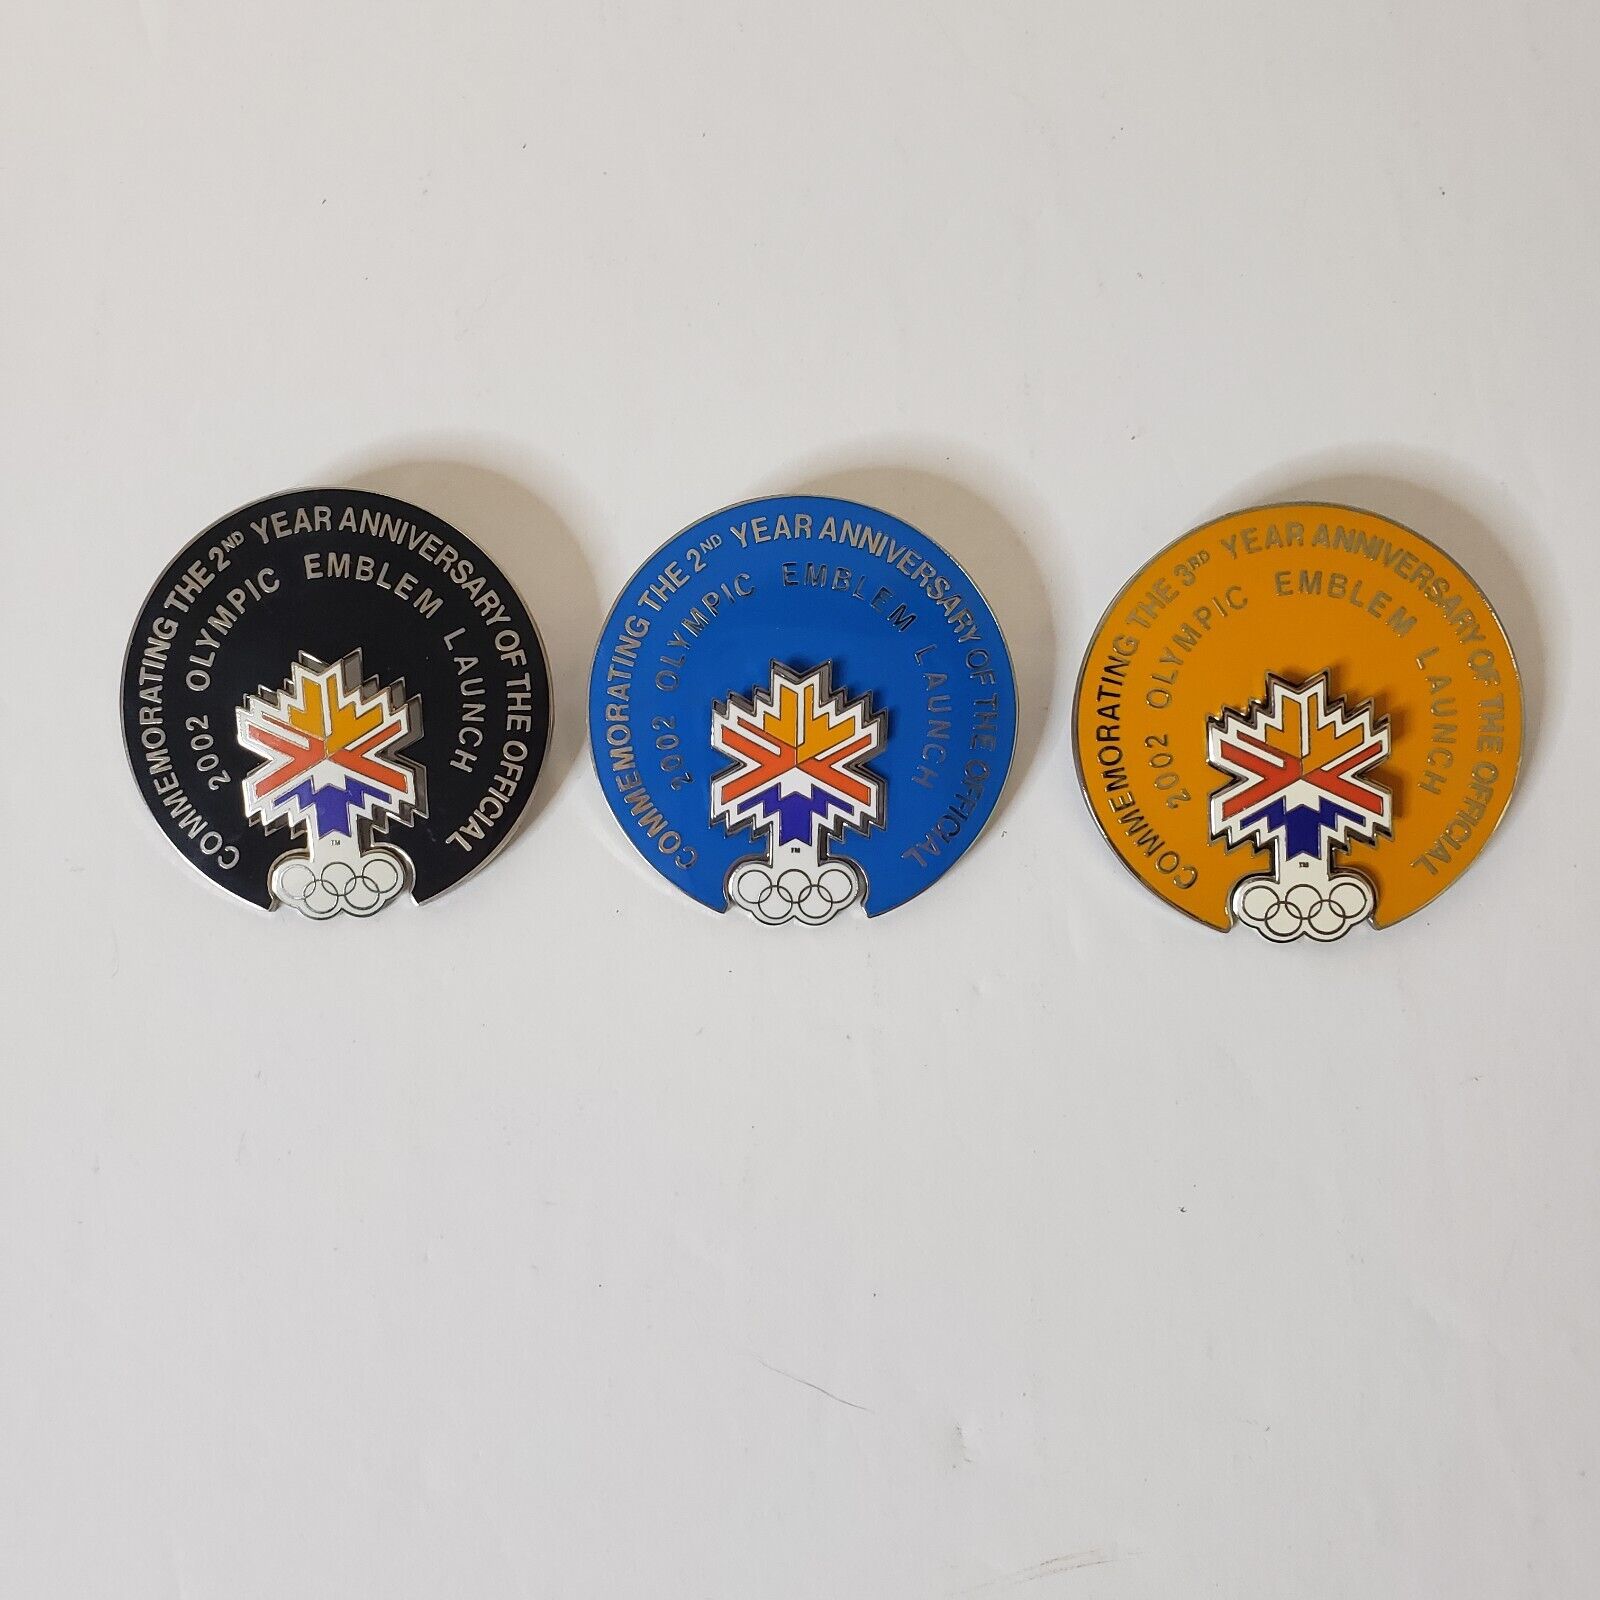 2002 Salt Lake City Olympic Emblem Launch 2nd 3rd Year Anniversary Pins 